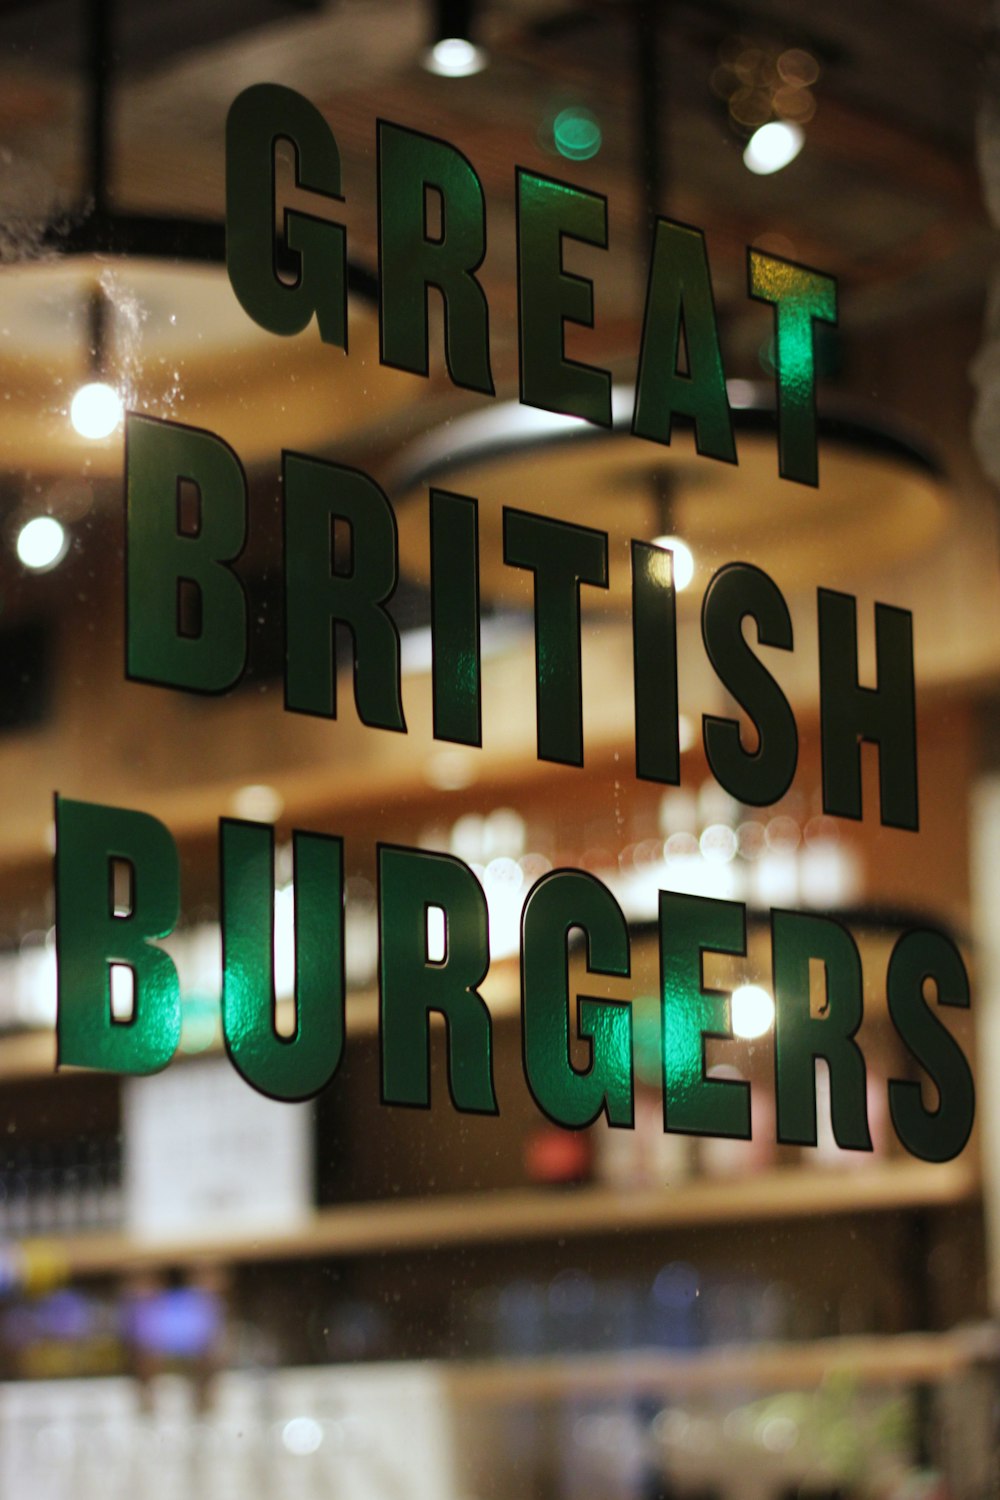 great British burgers tag